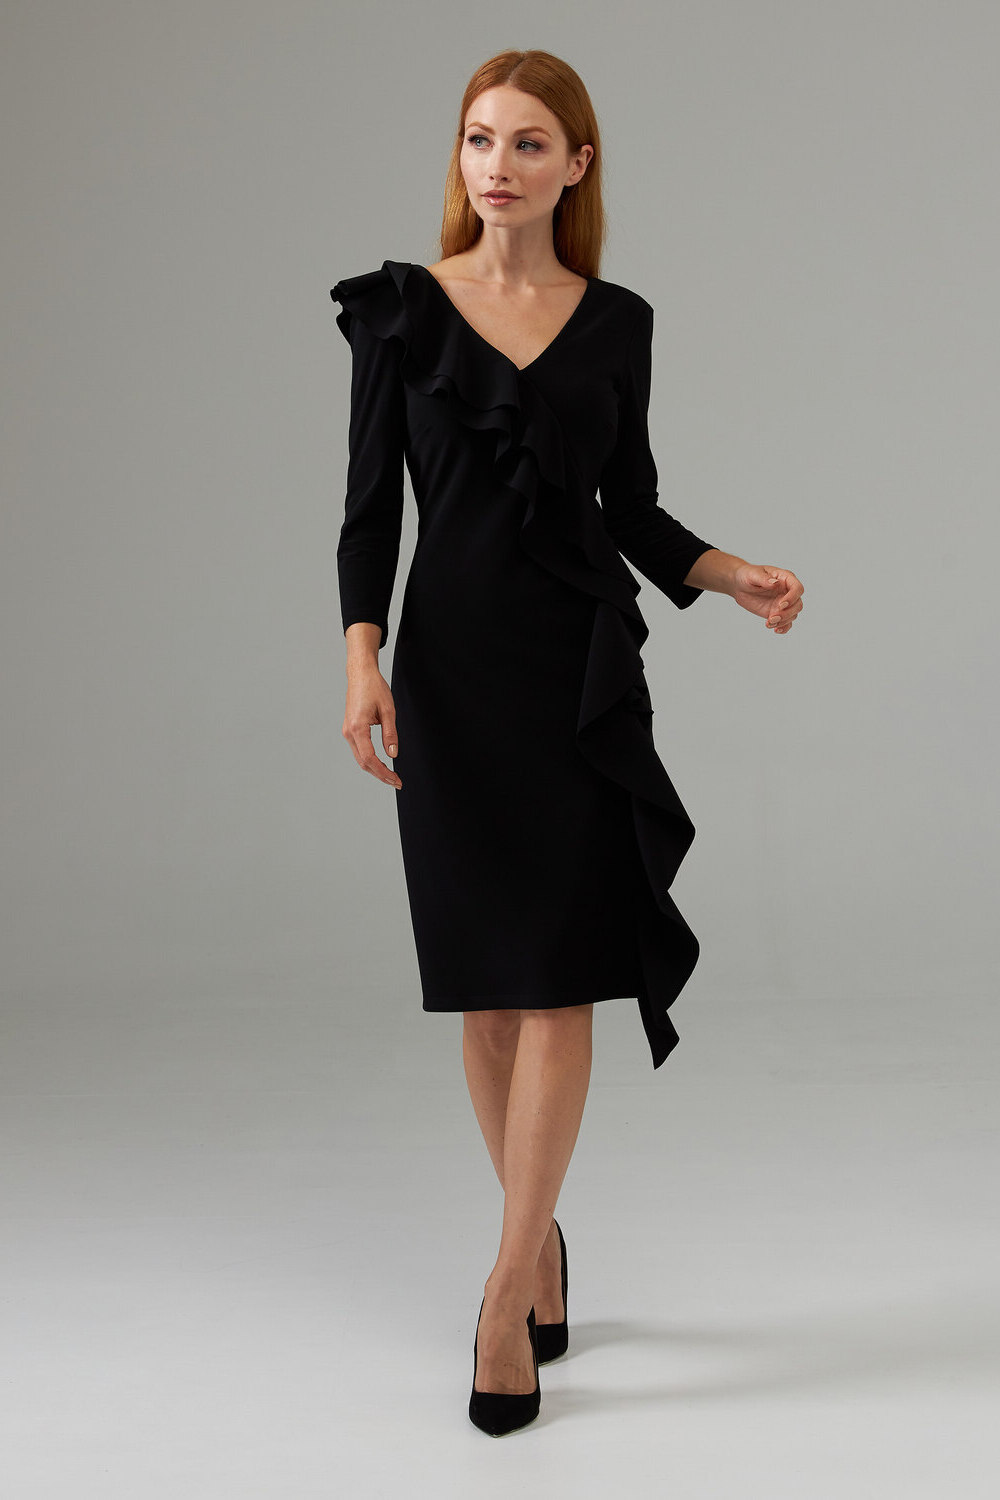 Joseph Ribkoff Side frilled long sleeved dress style 203336. Black